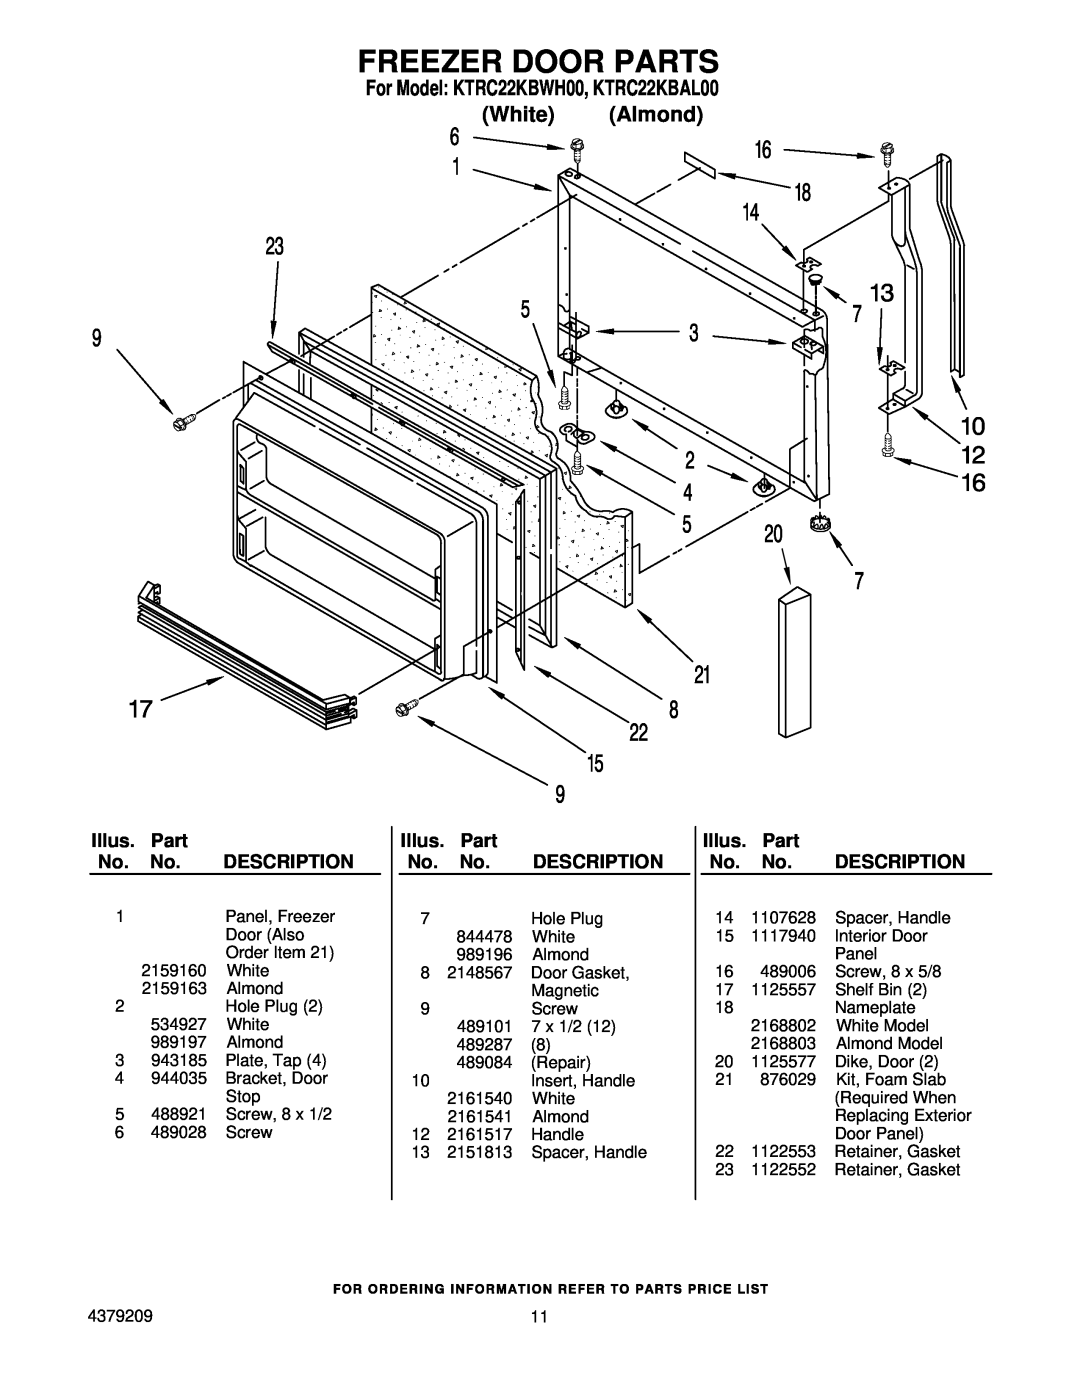 KitchenAid manual Freezer Door Parts, For Model KTRC22KBWH00, KTRC22KBAL00 White Almond, Illus, Description 